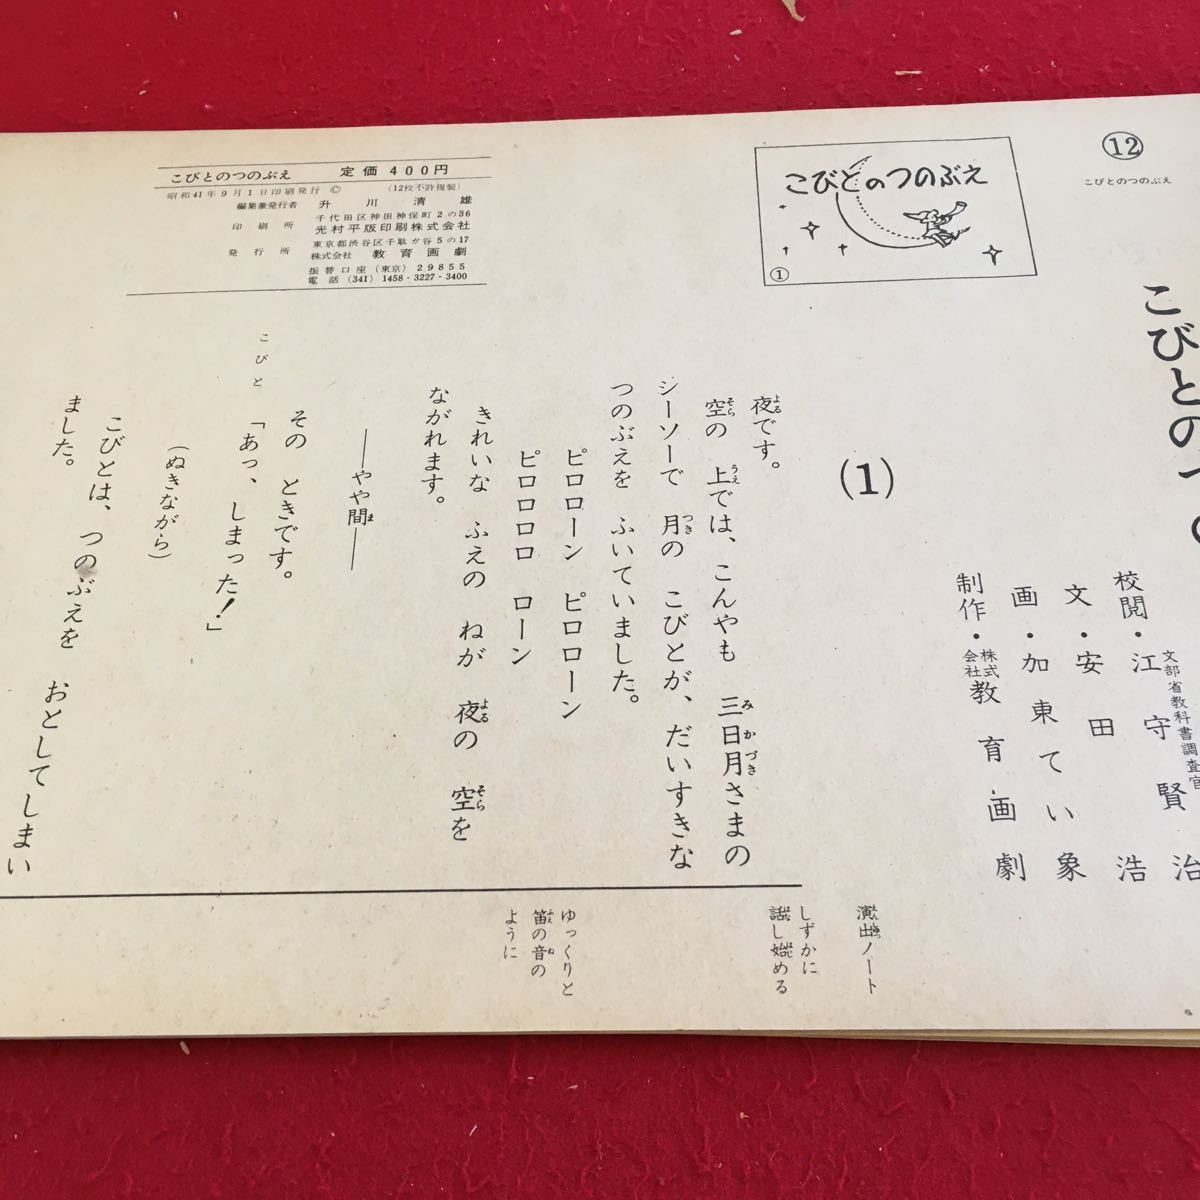 Z11 on -031.... .. .. writing * cheap rice field ..*. higashi ... work * education .. box attaching Showa era 41 year issue ...*... cooperation child oriented etc. 